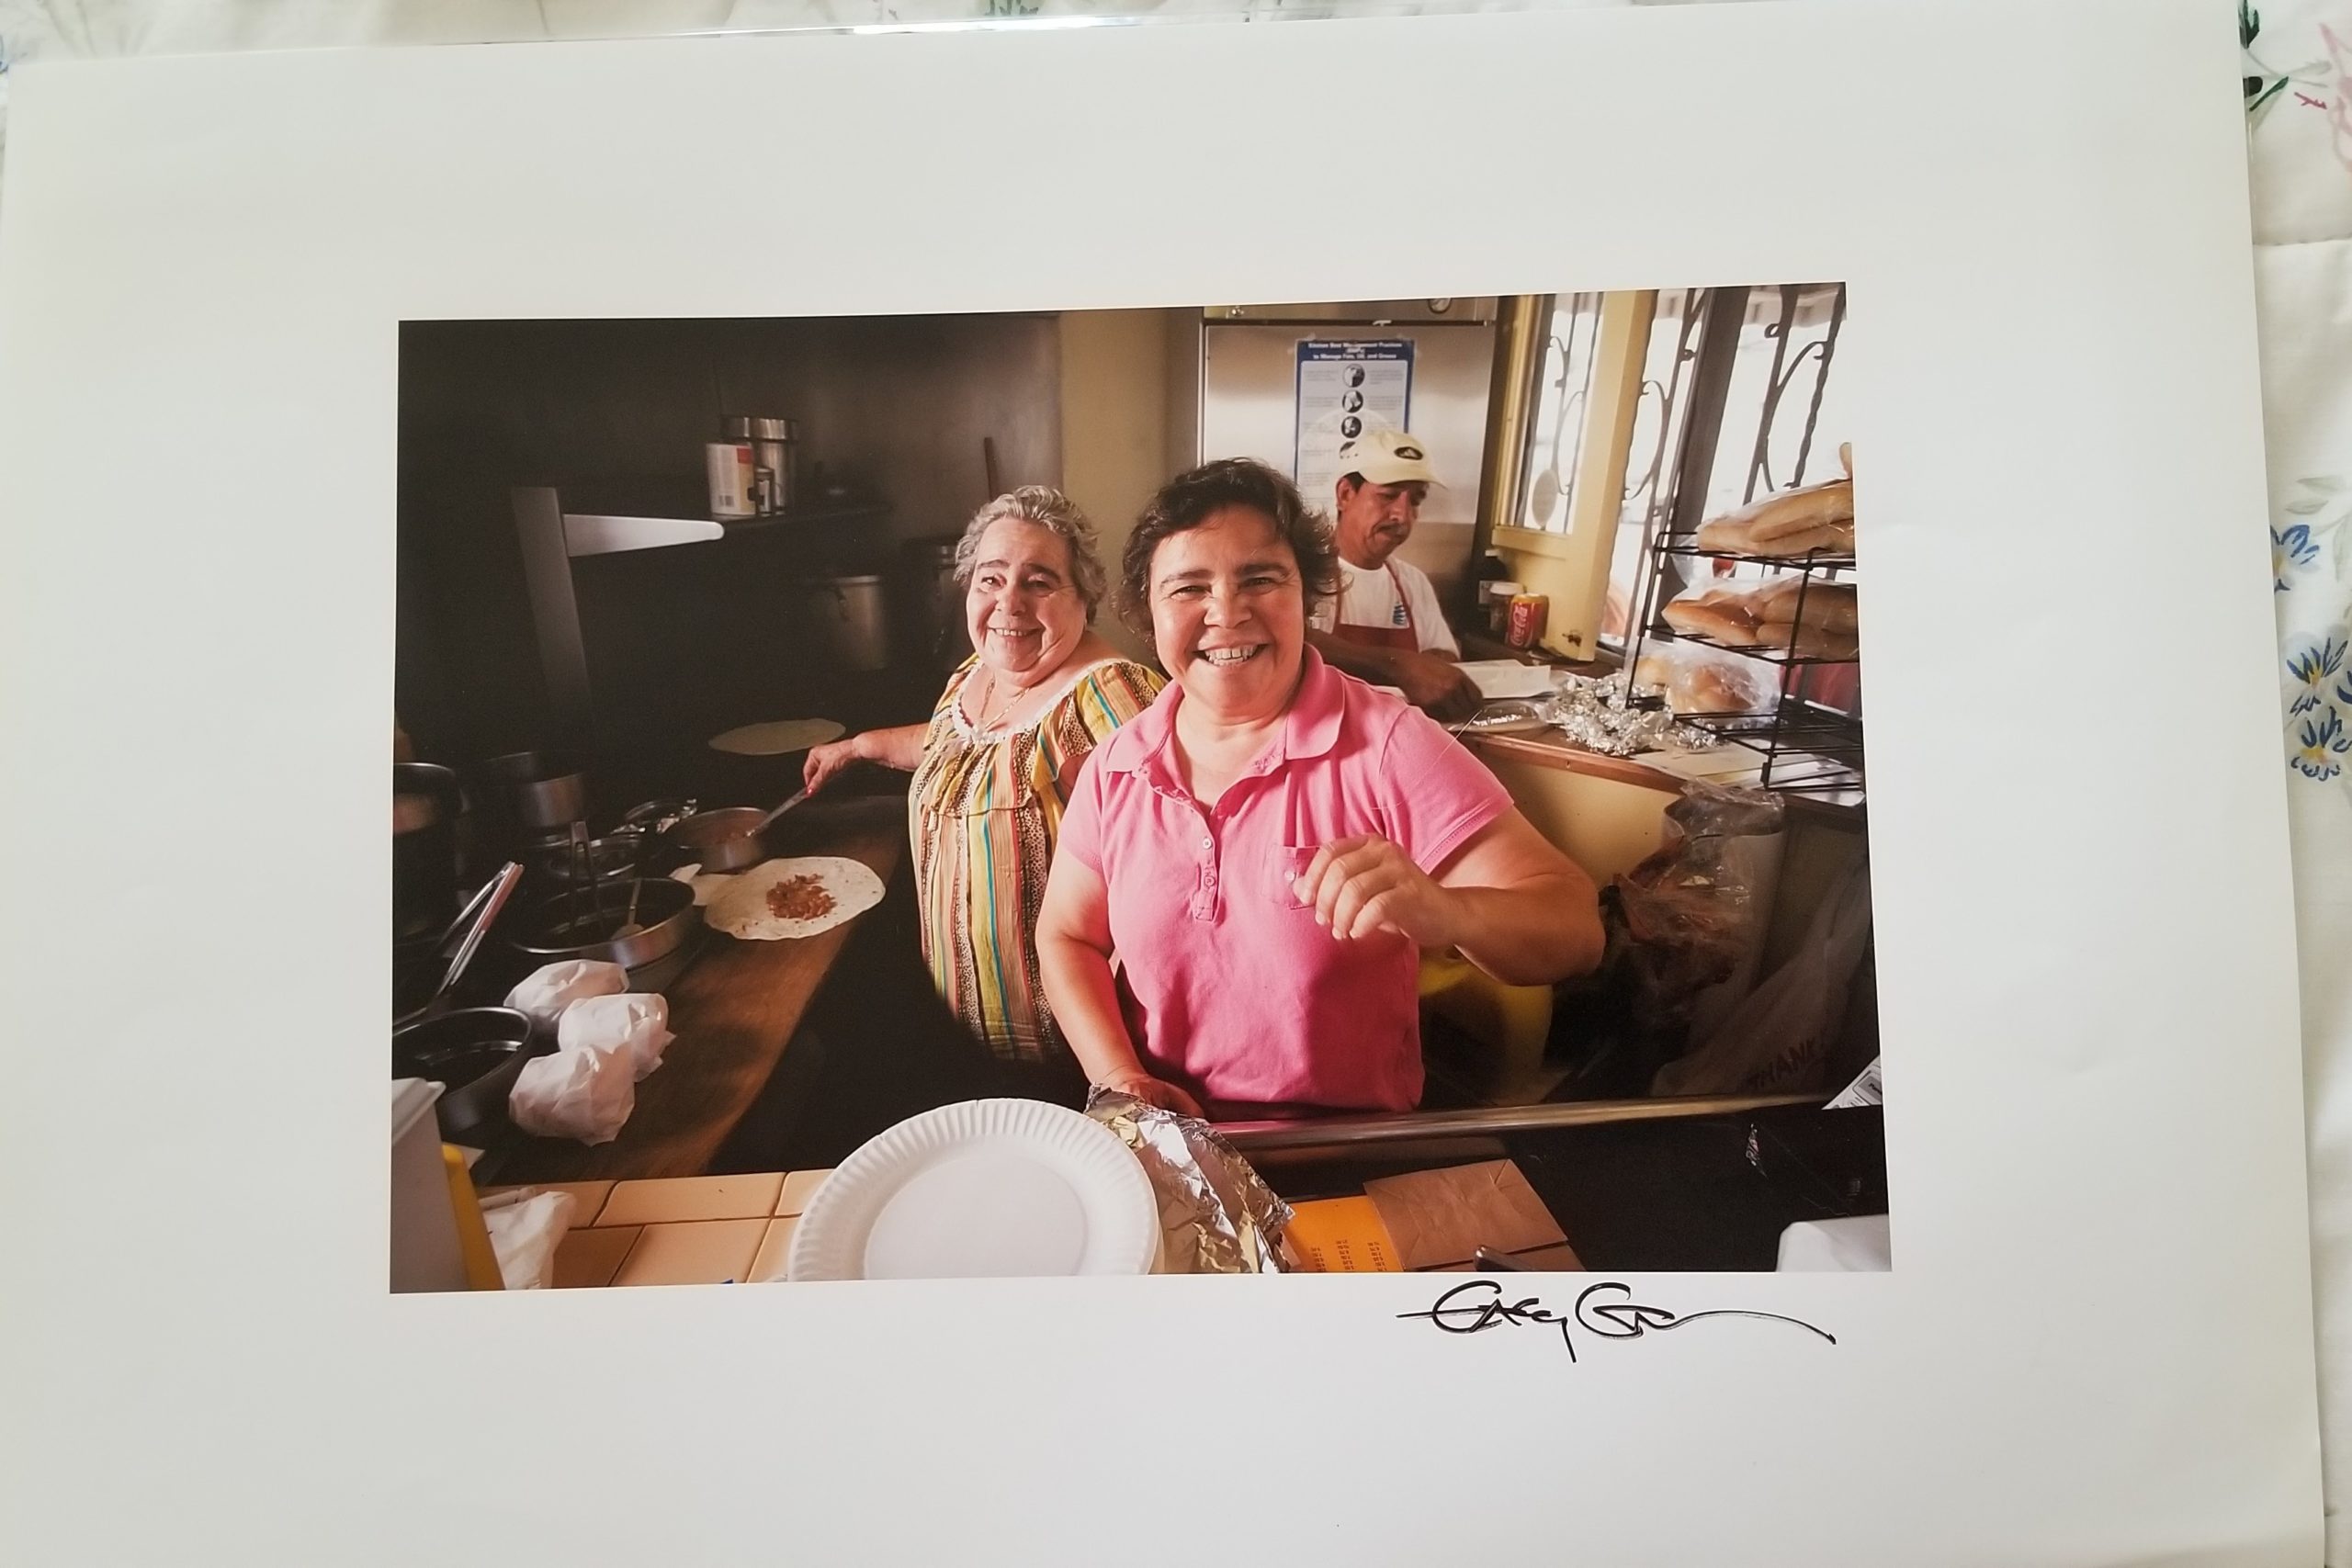 Yuca's Restaurant - Yuca's Greg Gorman Portraits of America